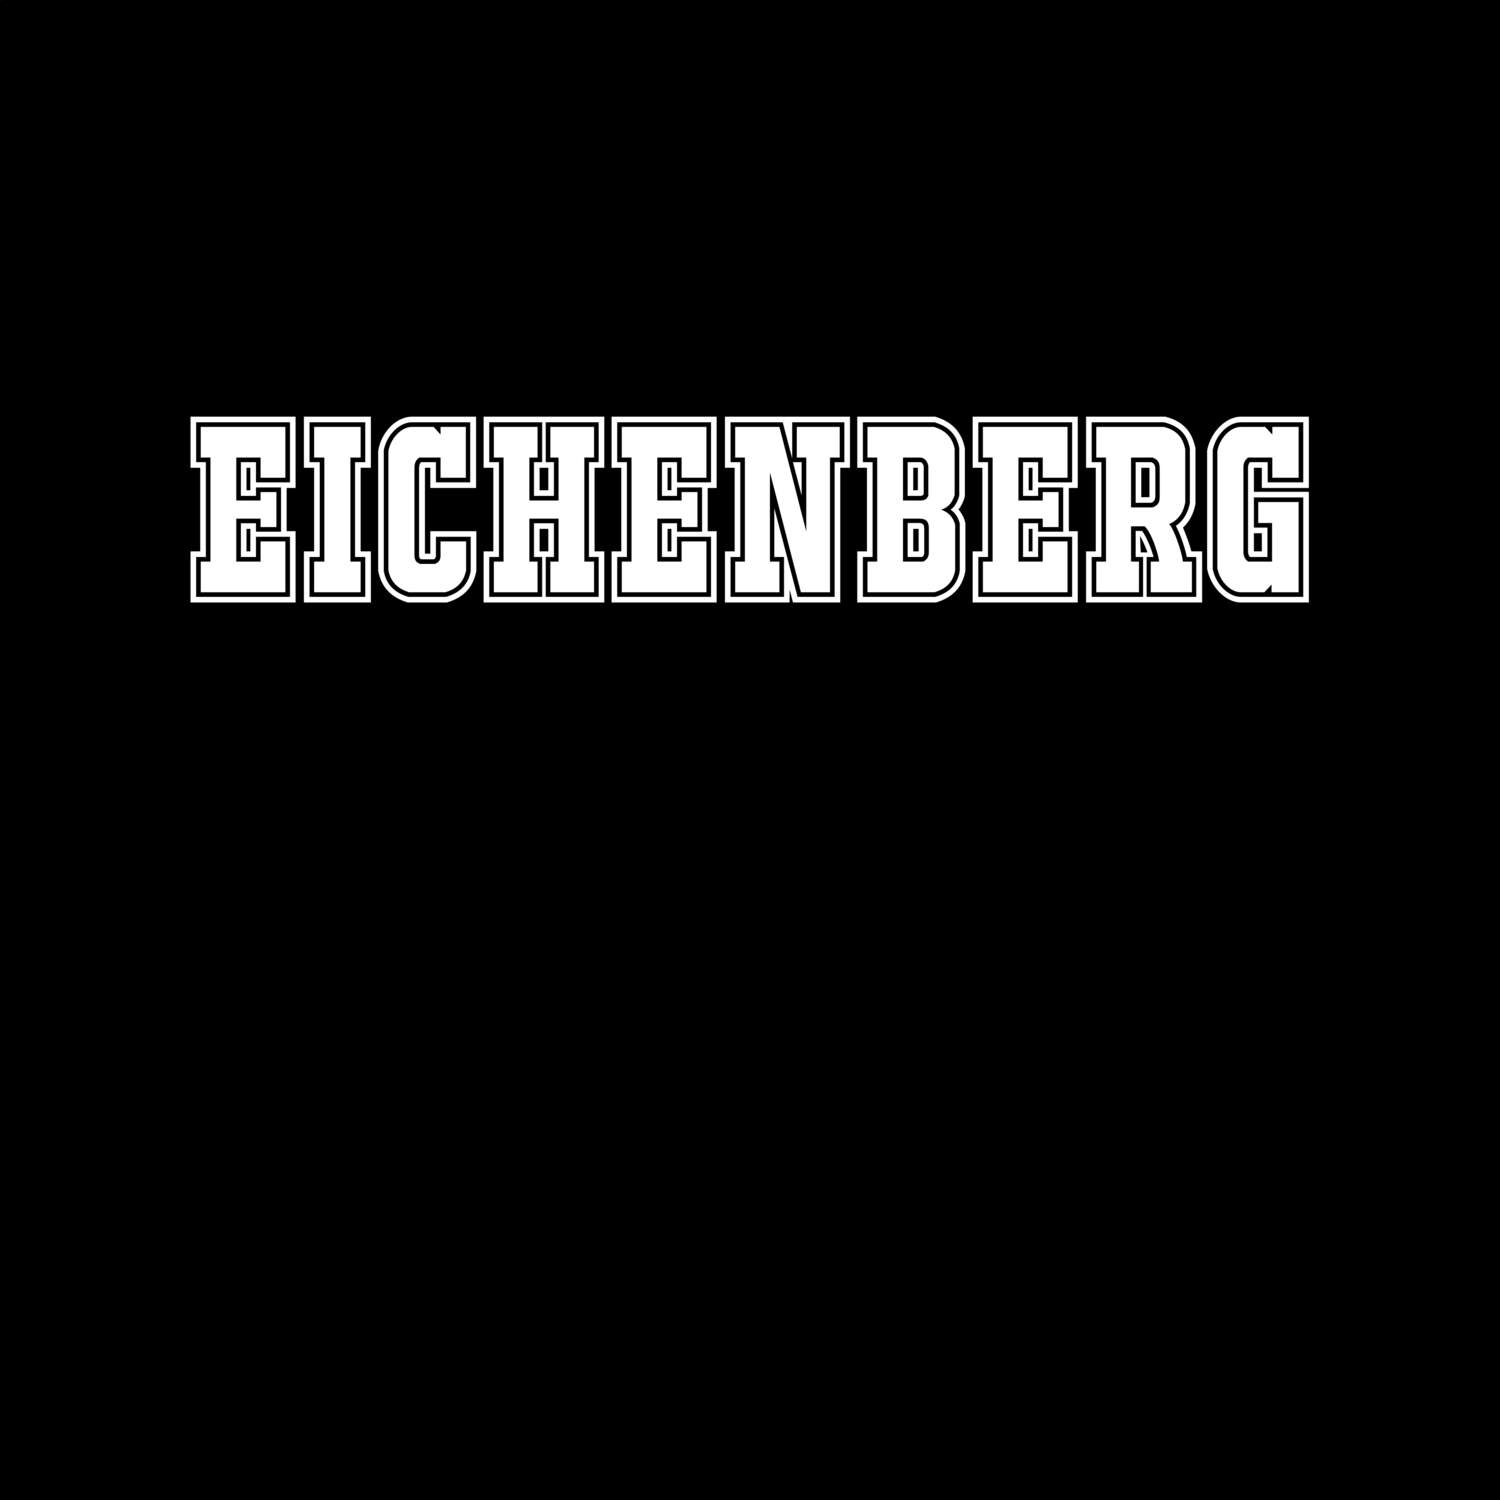 Eichenberg T-Shirt »Classic«